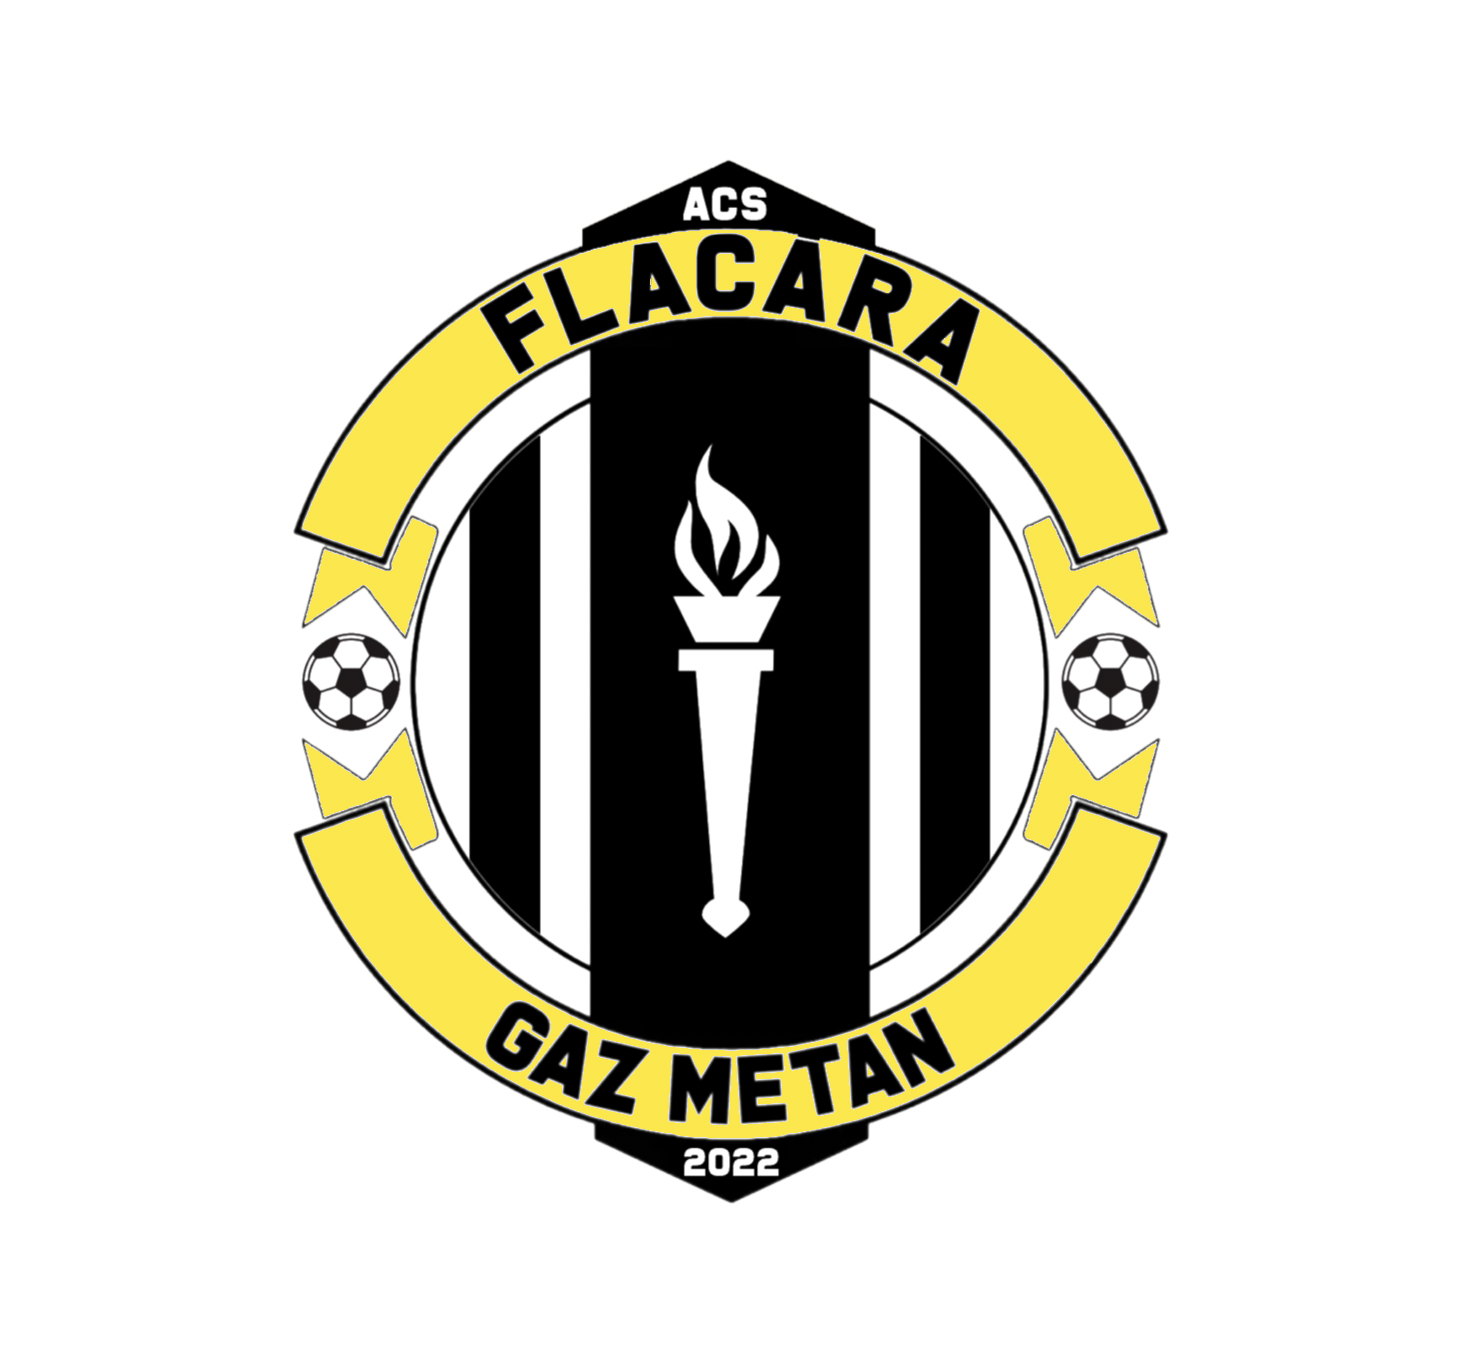 ACS Flacara Gaz-Metan